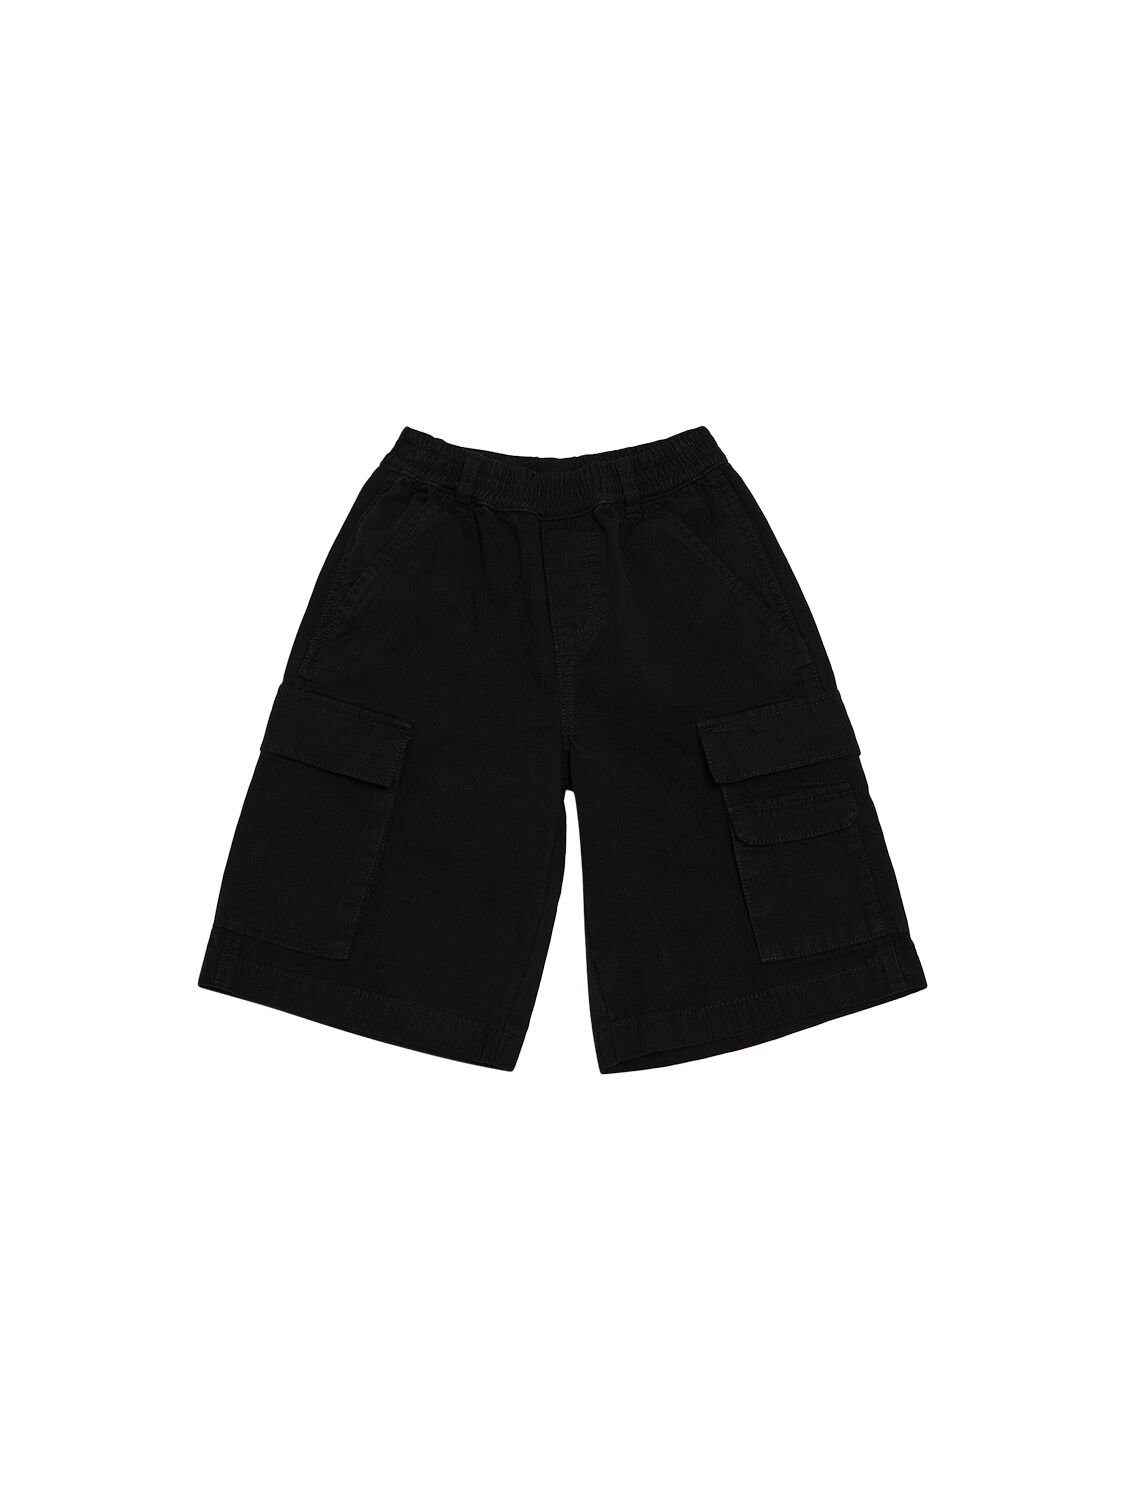 Image of Cotton Gabardine Bermuda Shorts